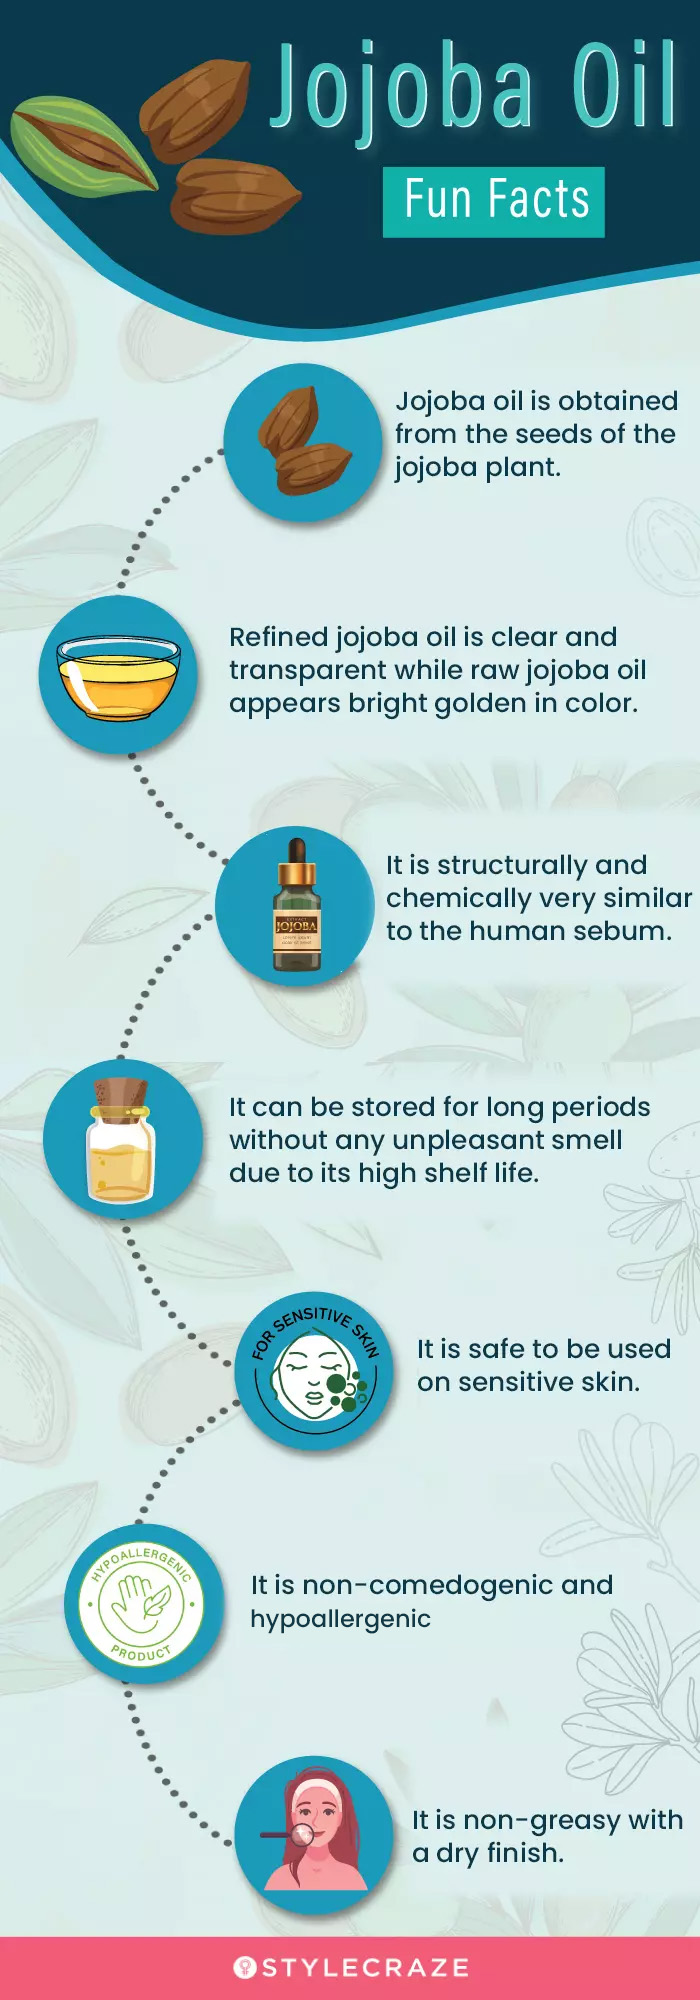 jojoba oil fun facts (infographic)